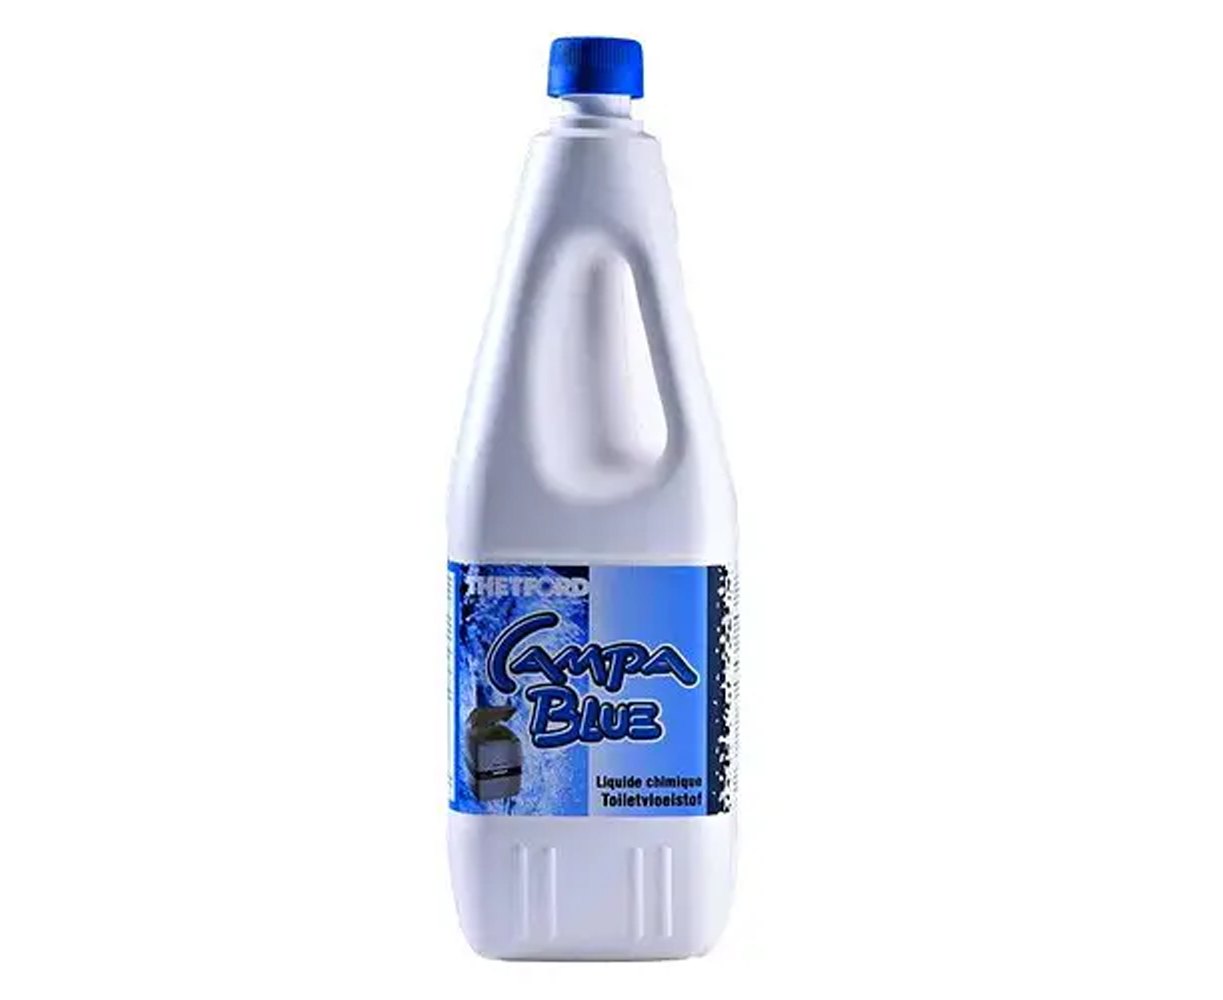 Жидкость для биотуалета Thetford Campa Blue 2 л (8710315990874 .